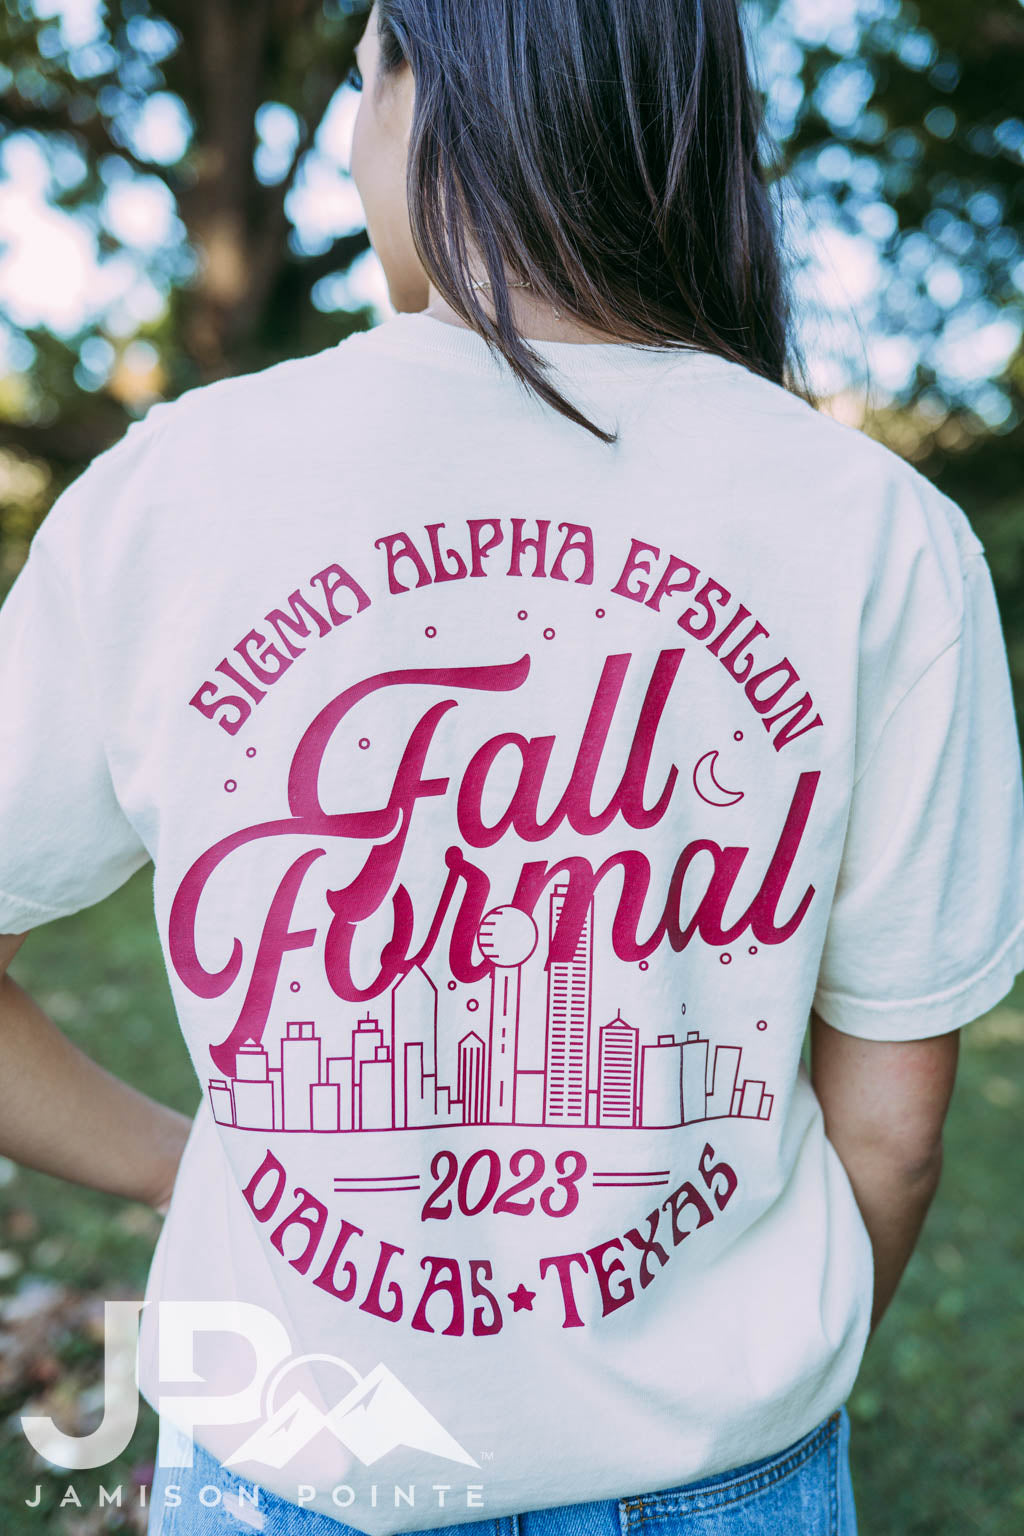 Custom Sigma Alpha Epsilon Shirts - Fraternity Shirts | Jamison Pointe